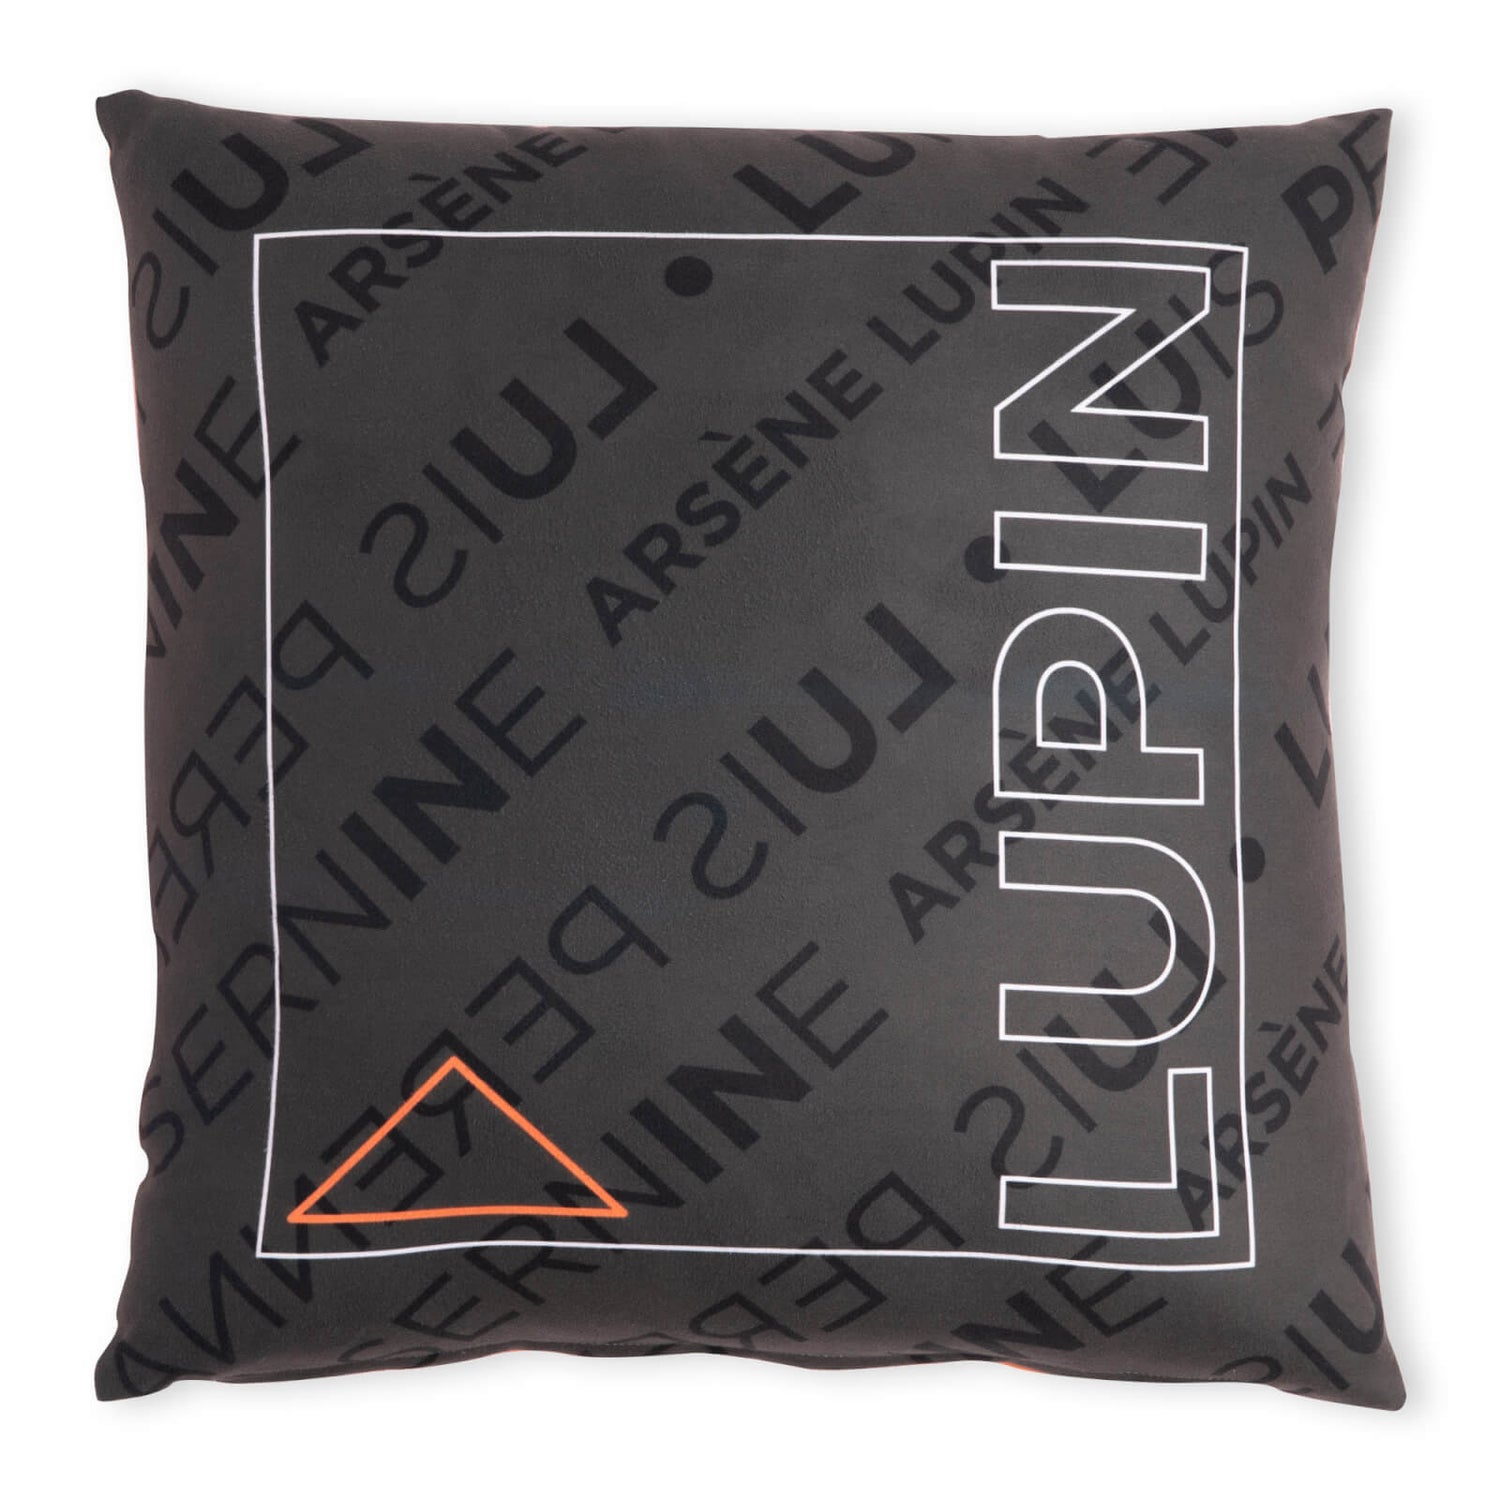 Lupin Alias Square Cushion